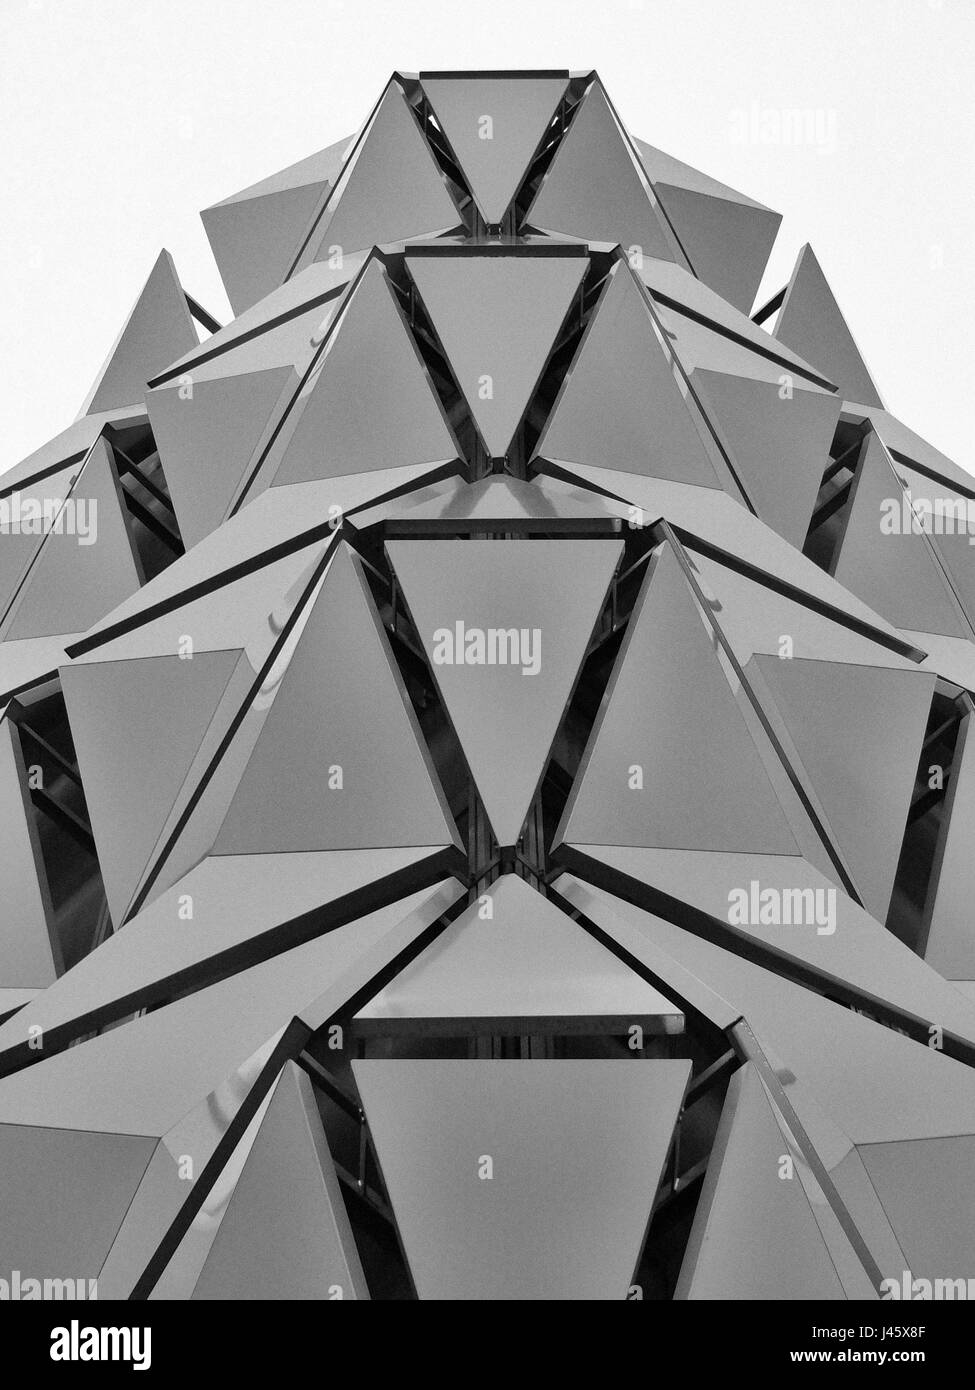 cladding on geometric modern steel building Stock Photo - Alamy